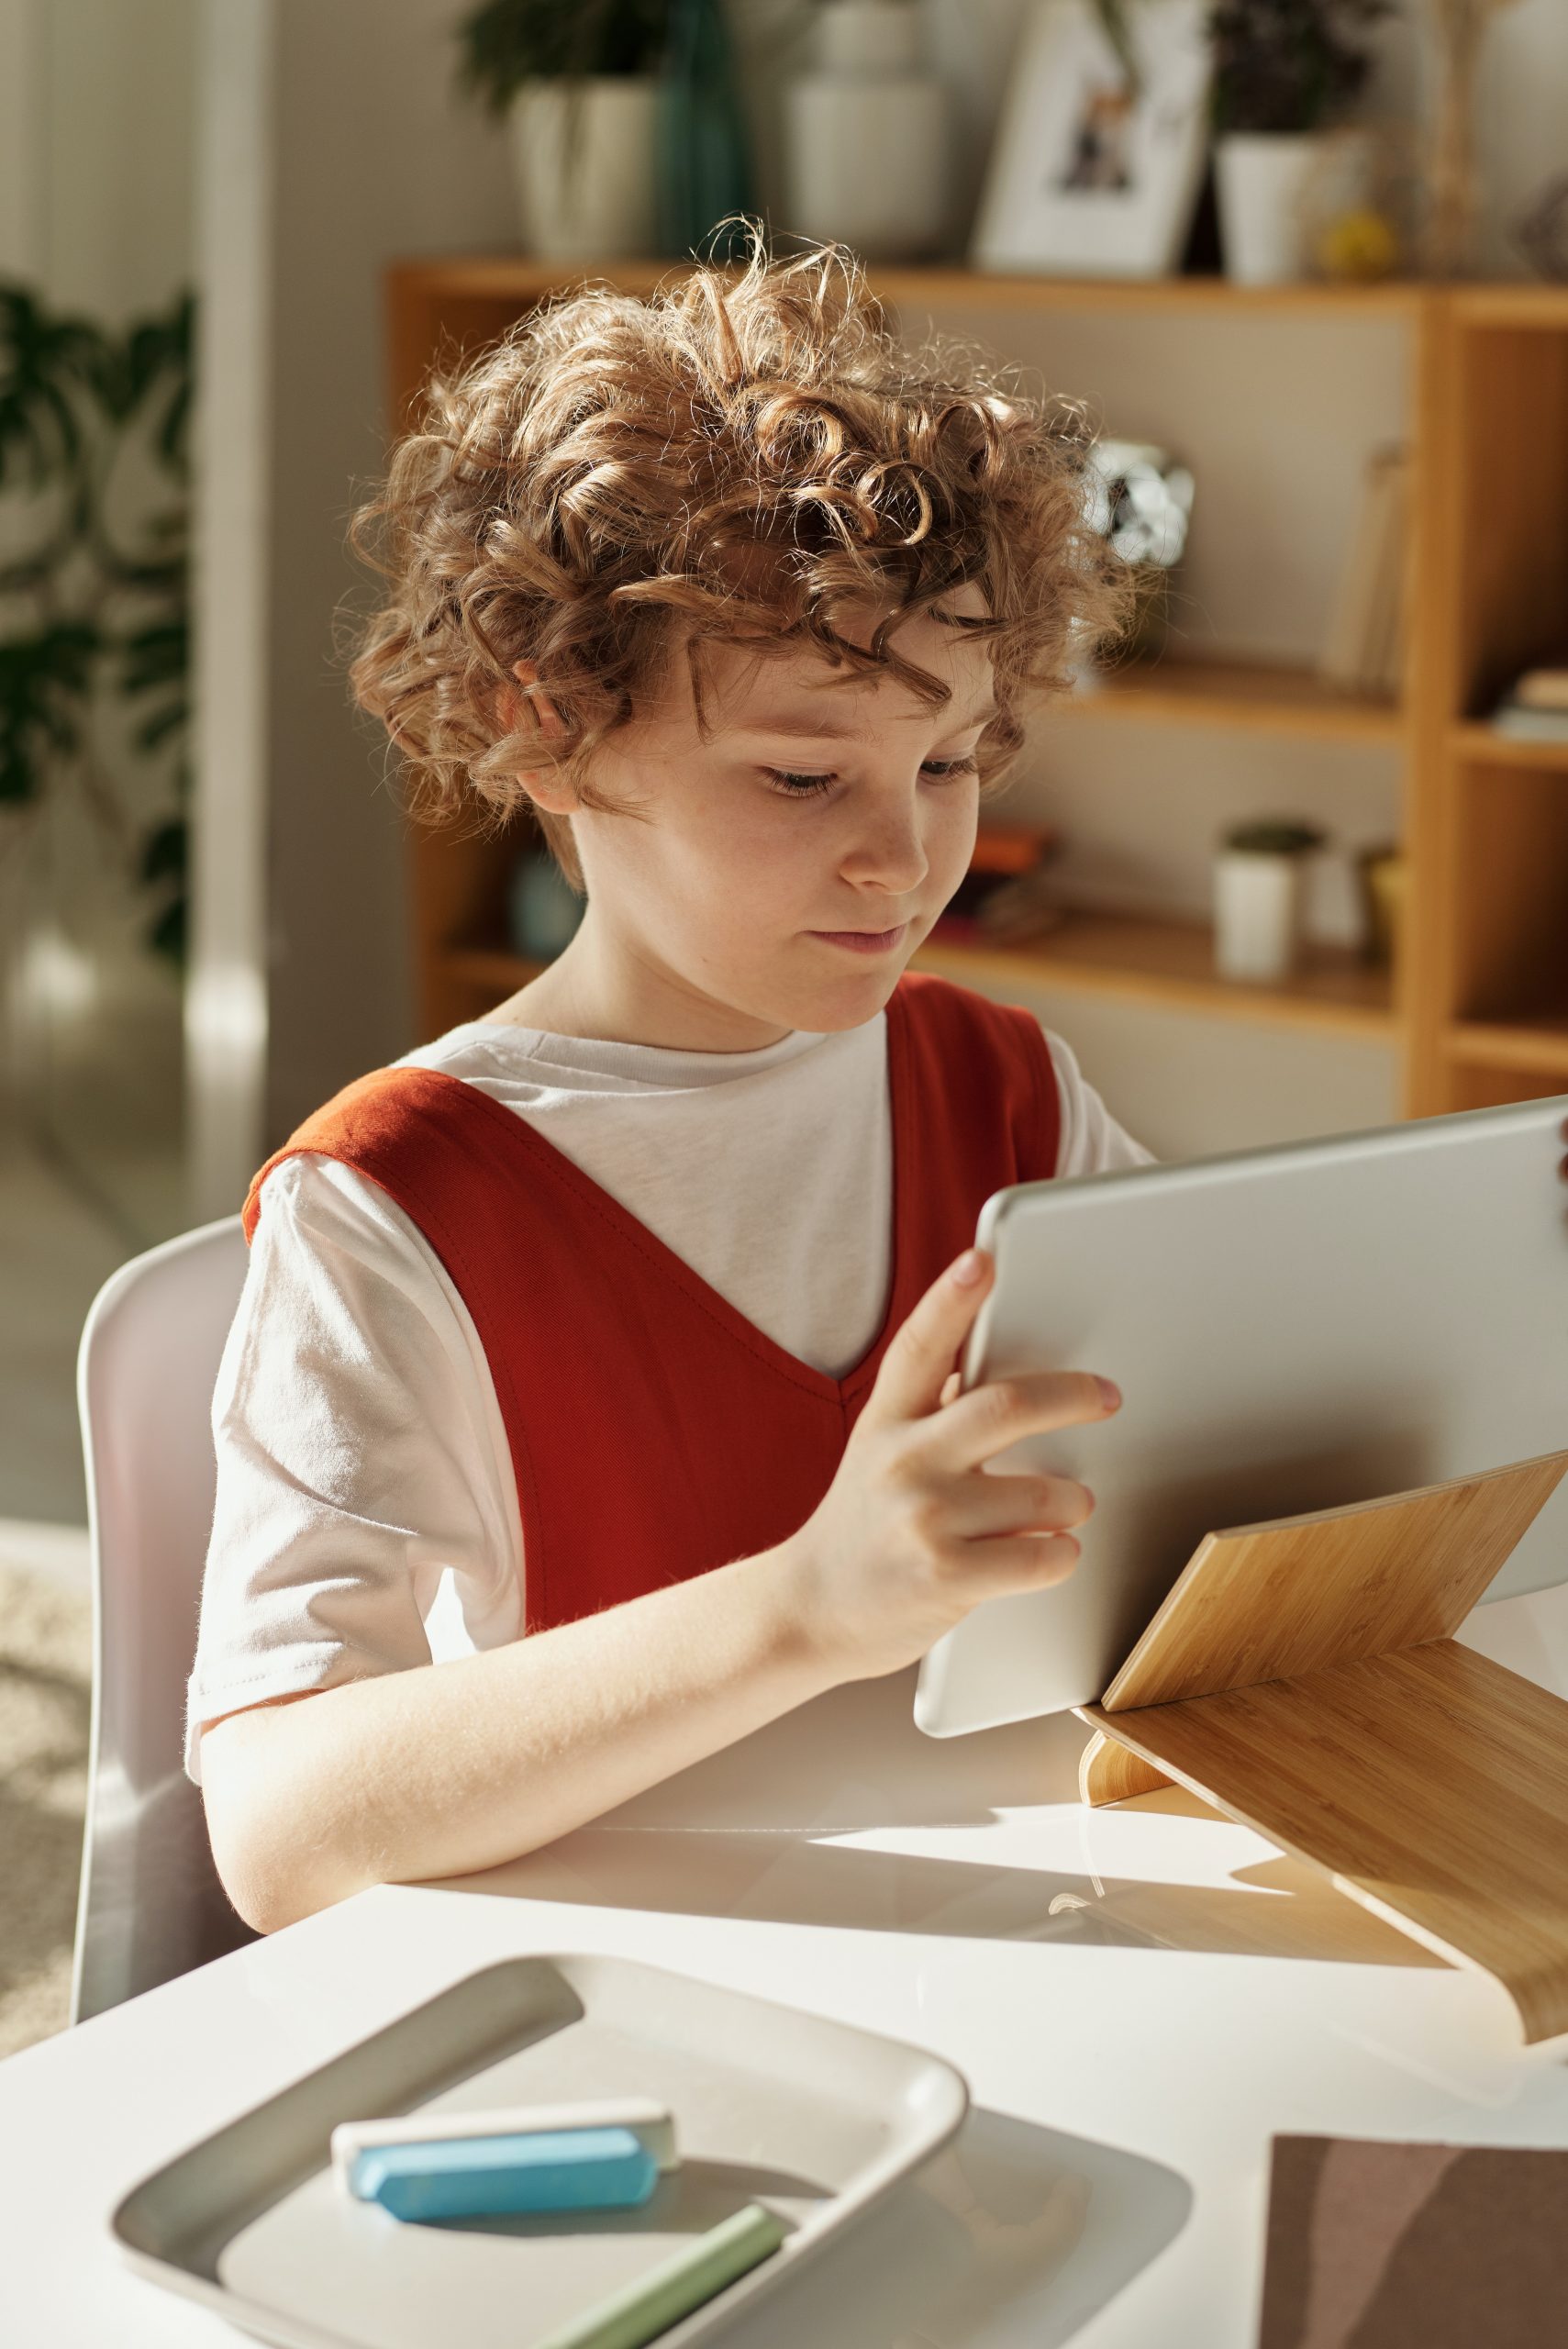 pexels julia m cameron 4145076 scaled - How internet benefits your children